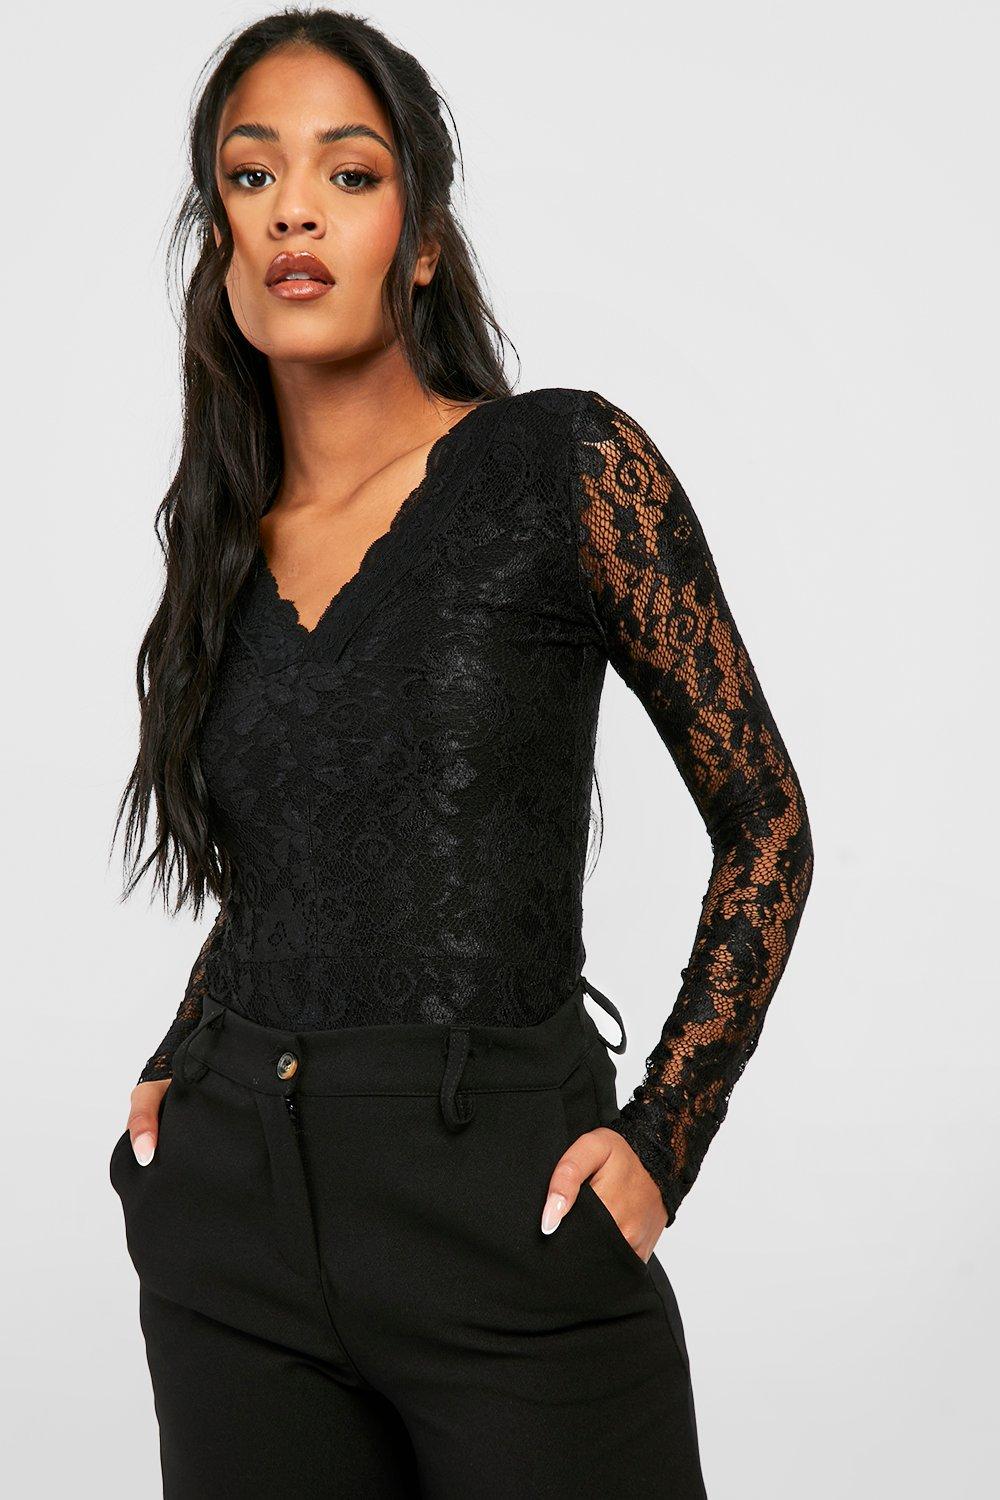 https://media.boohoo.com/i/boohoo/tzz92209_black_xl/female-black-tall-lace-long-sleeved-bodysuit